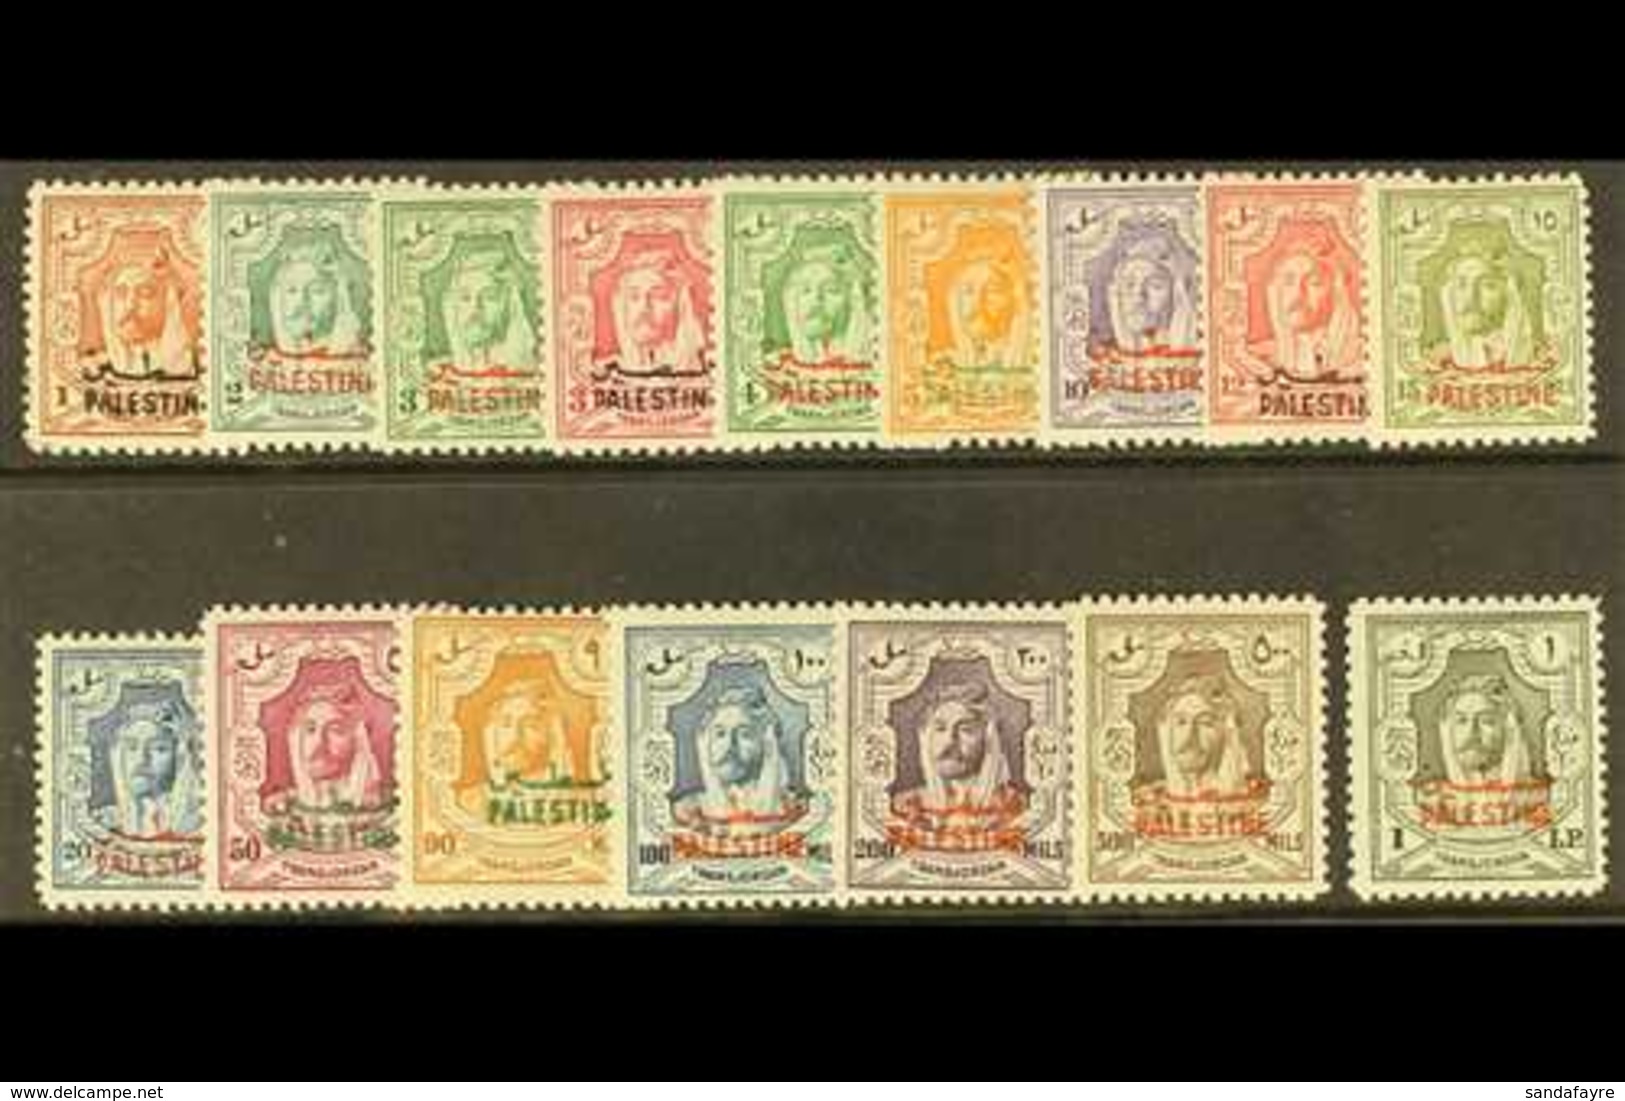 OCCUPATION OF PALESTINE  1948 Set £1 Complete Ovptd "Palestine", SG P1/16, Fine Mint. (16 Stamps) For More Images, Pleas - Jordanie